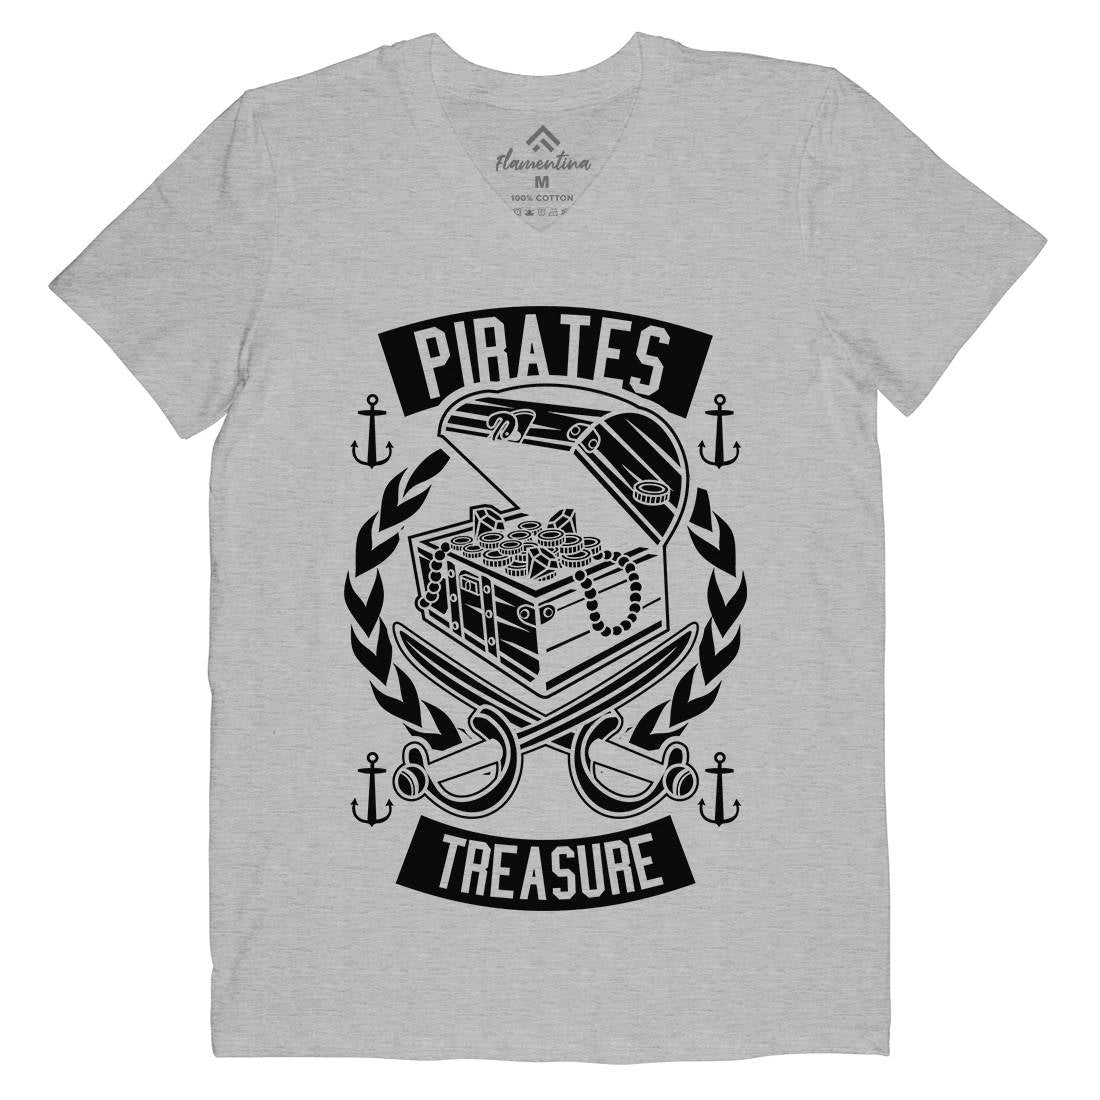 Pirates Treasure Mens Organic V-Neck T-Shirt Navy B600